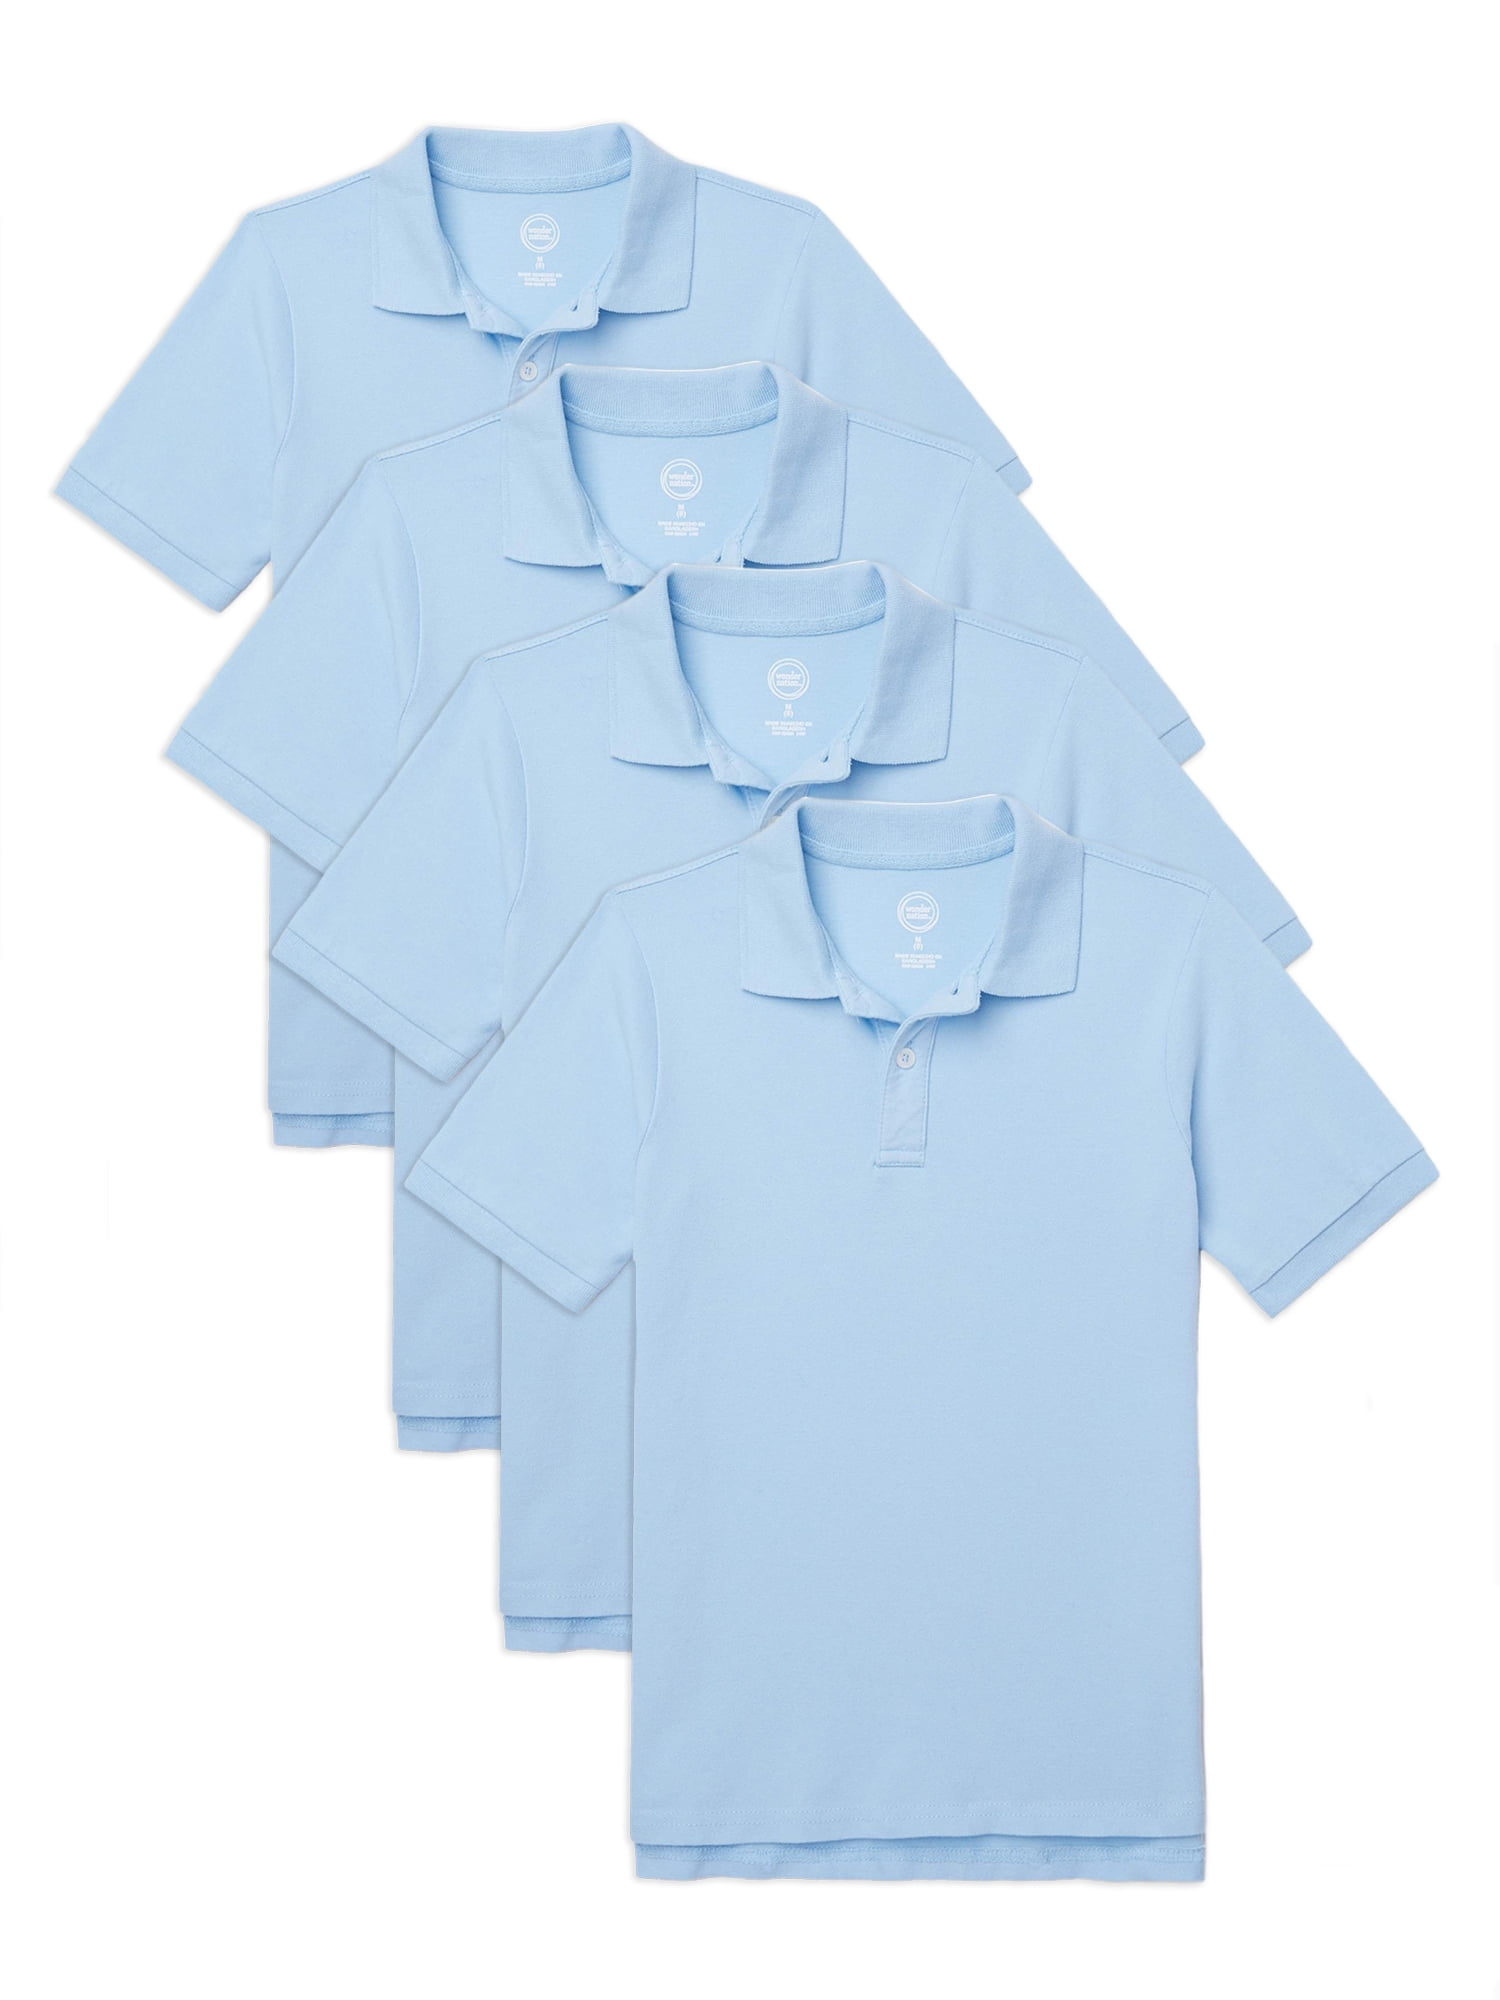 Wonder Nation Young Mens School Uniform Short Sleeve Pique Polo Shirt,  Sizes S-XL 